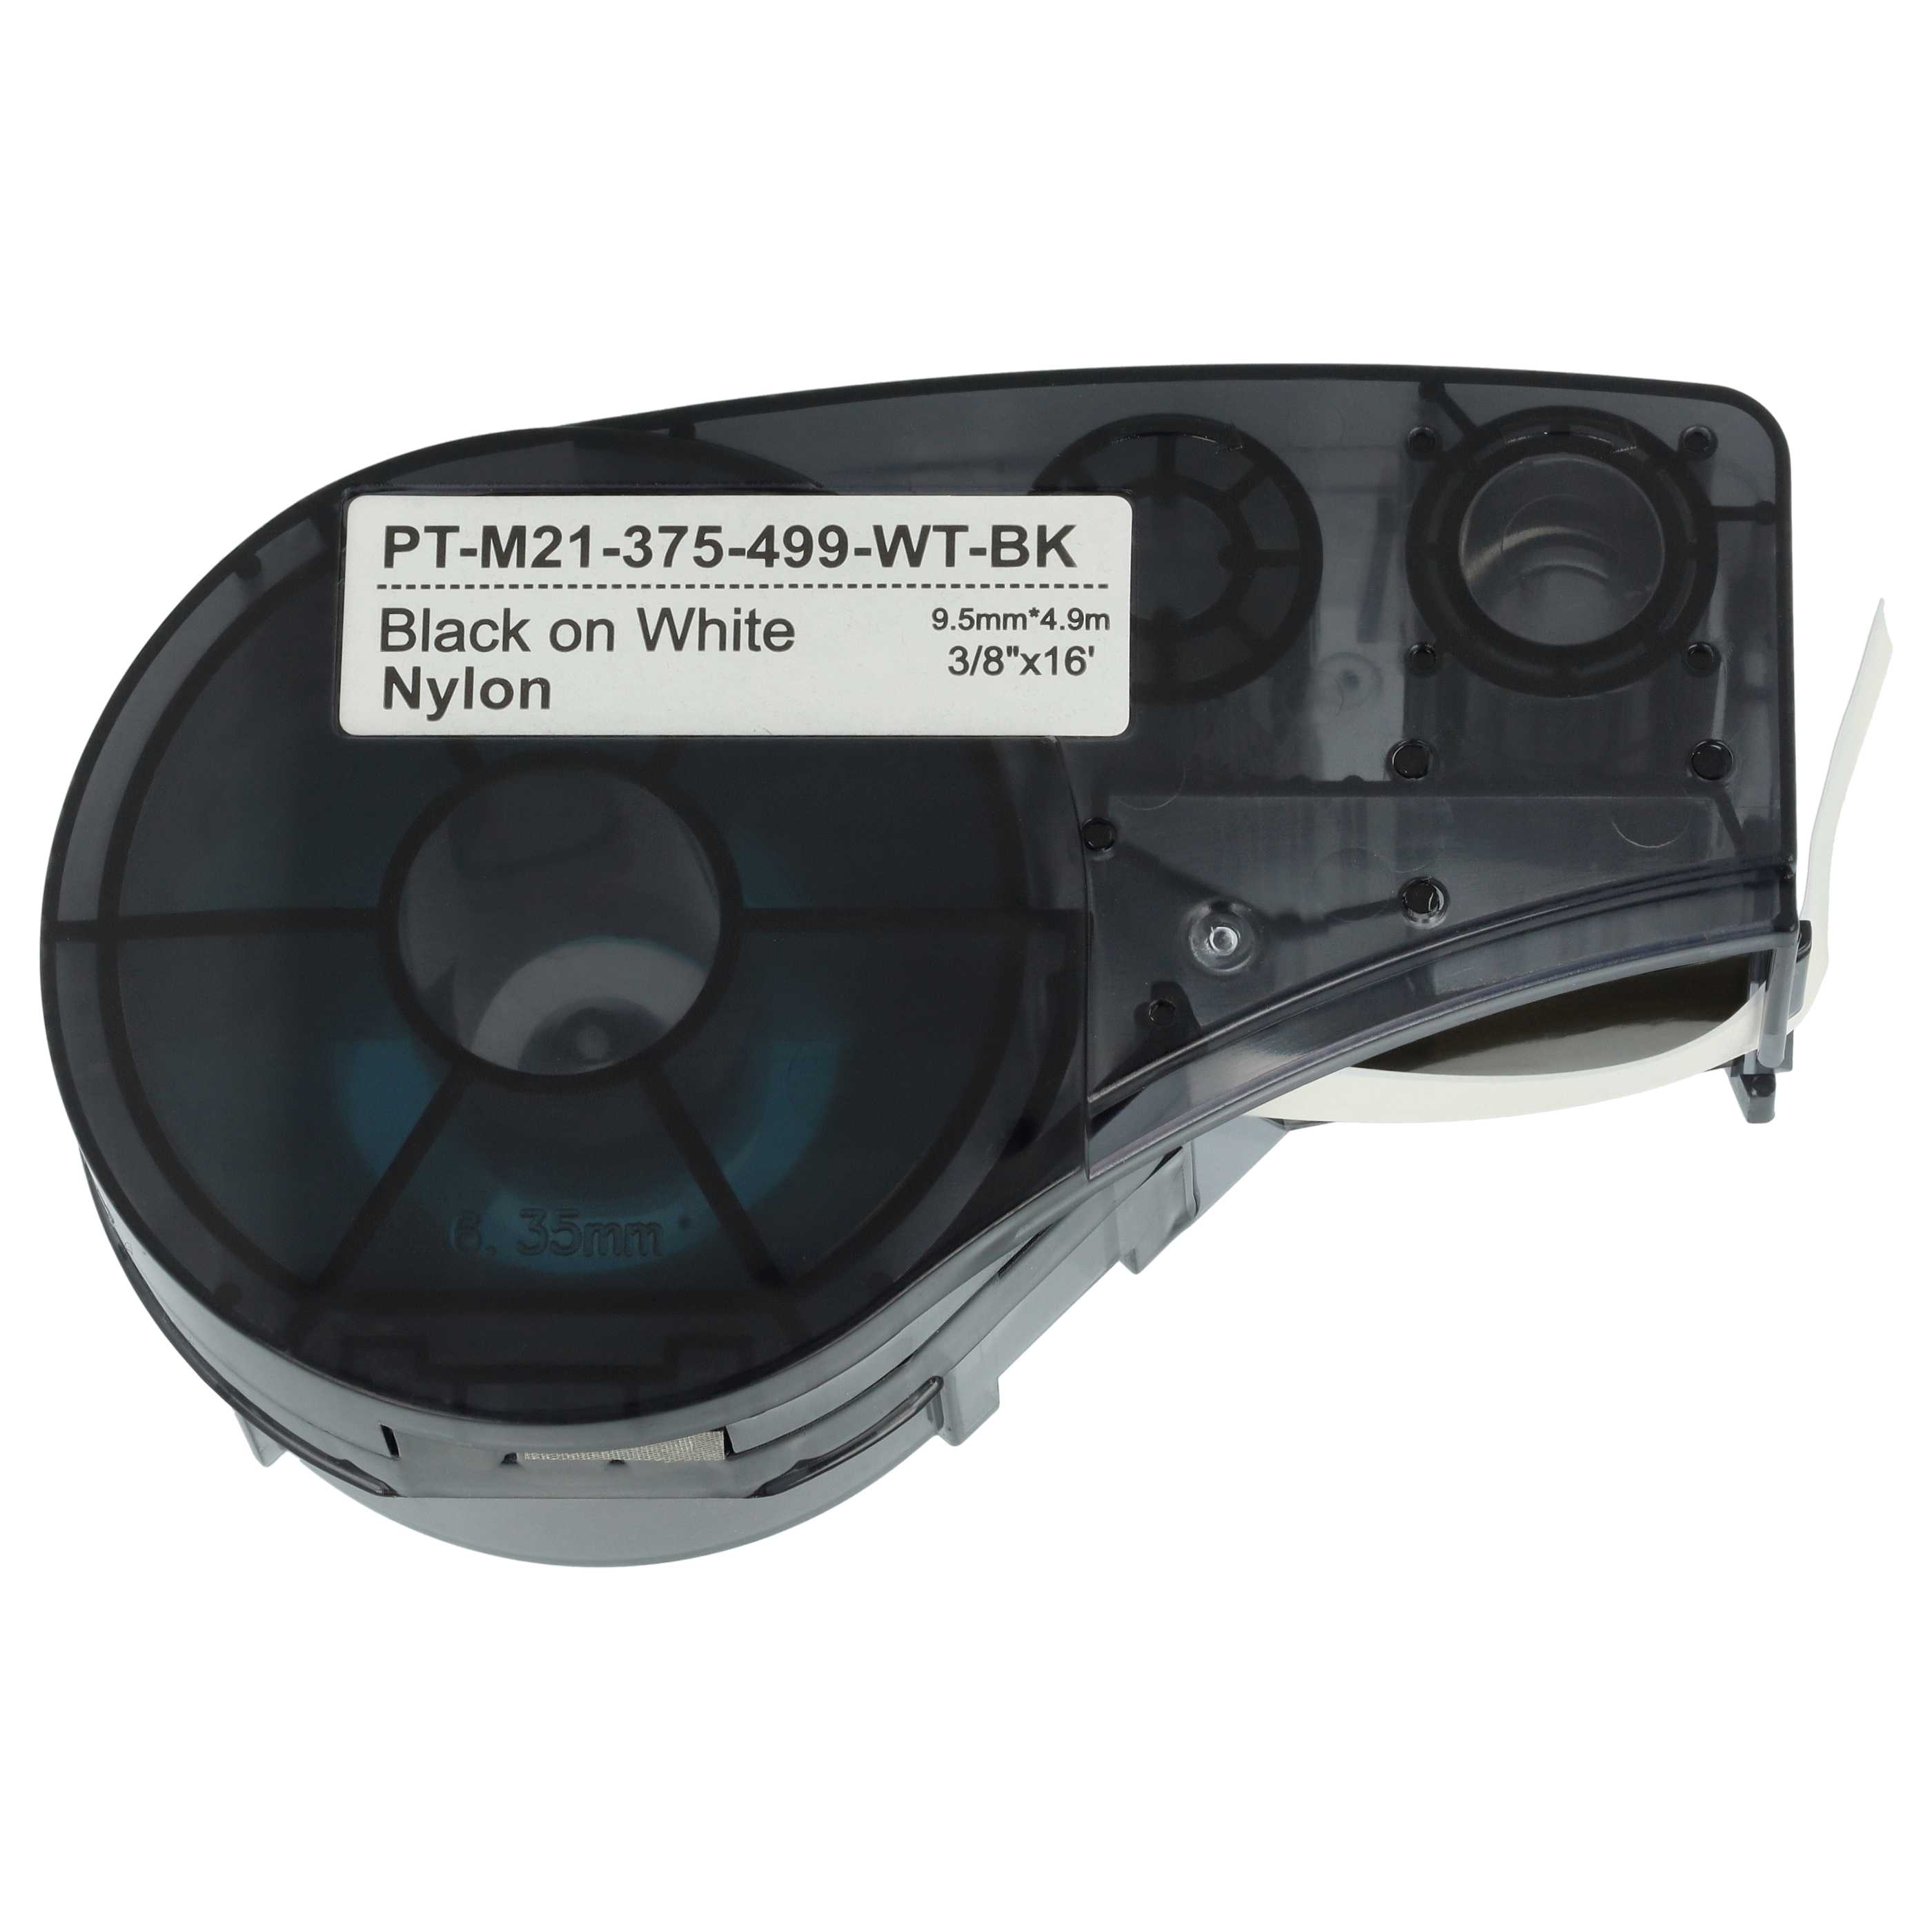 5x Casete cinta escritura reemplaza Brady M21-375-499 Negro su Blanco